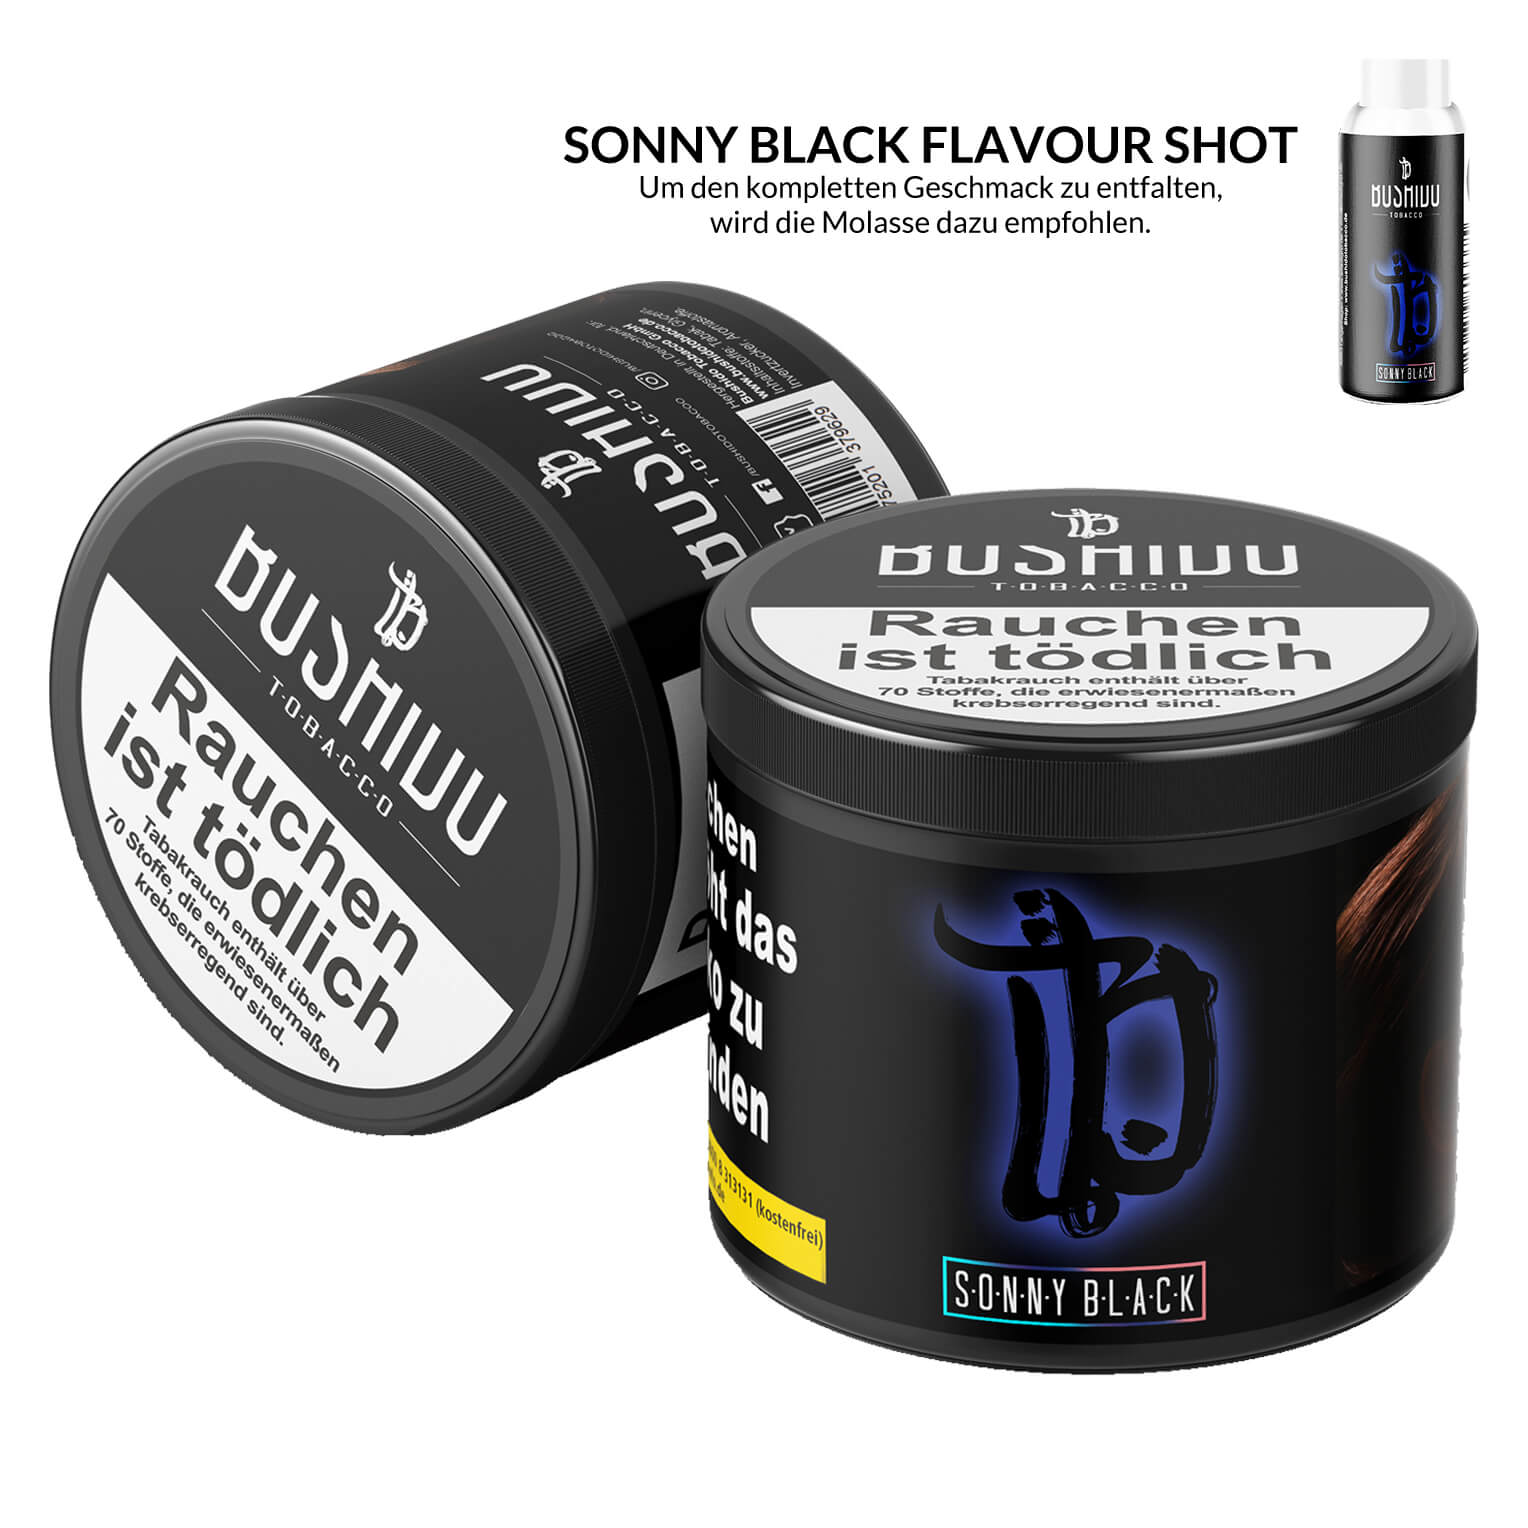 Bushido tabak Sonny Black 200g